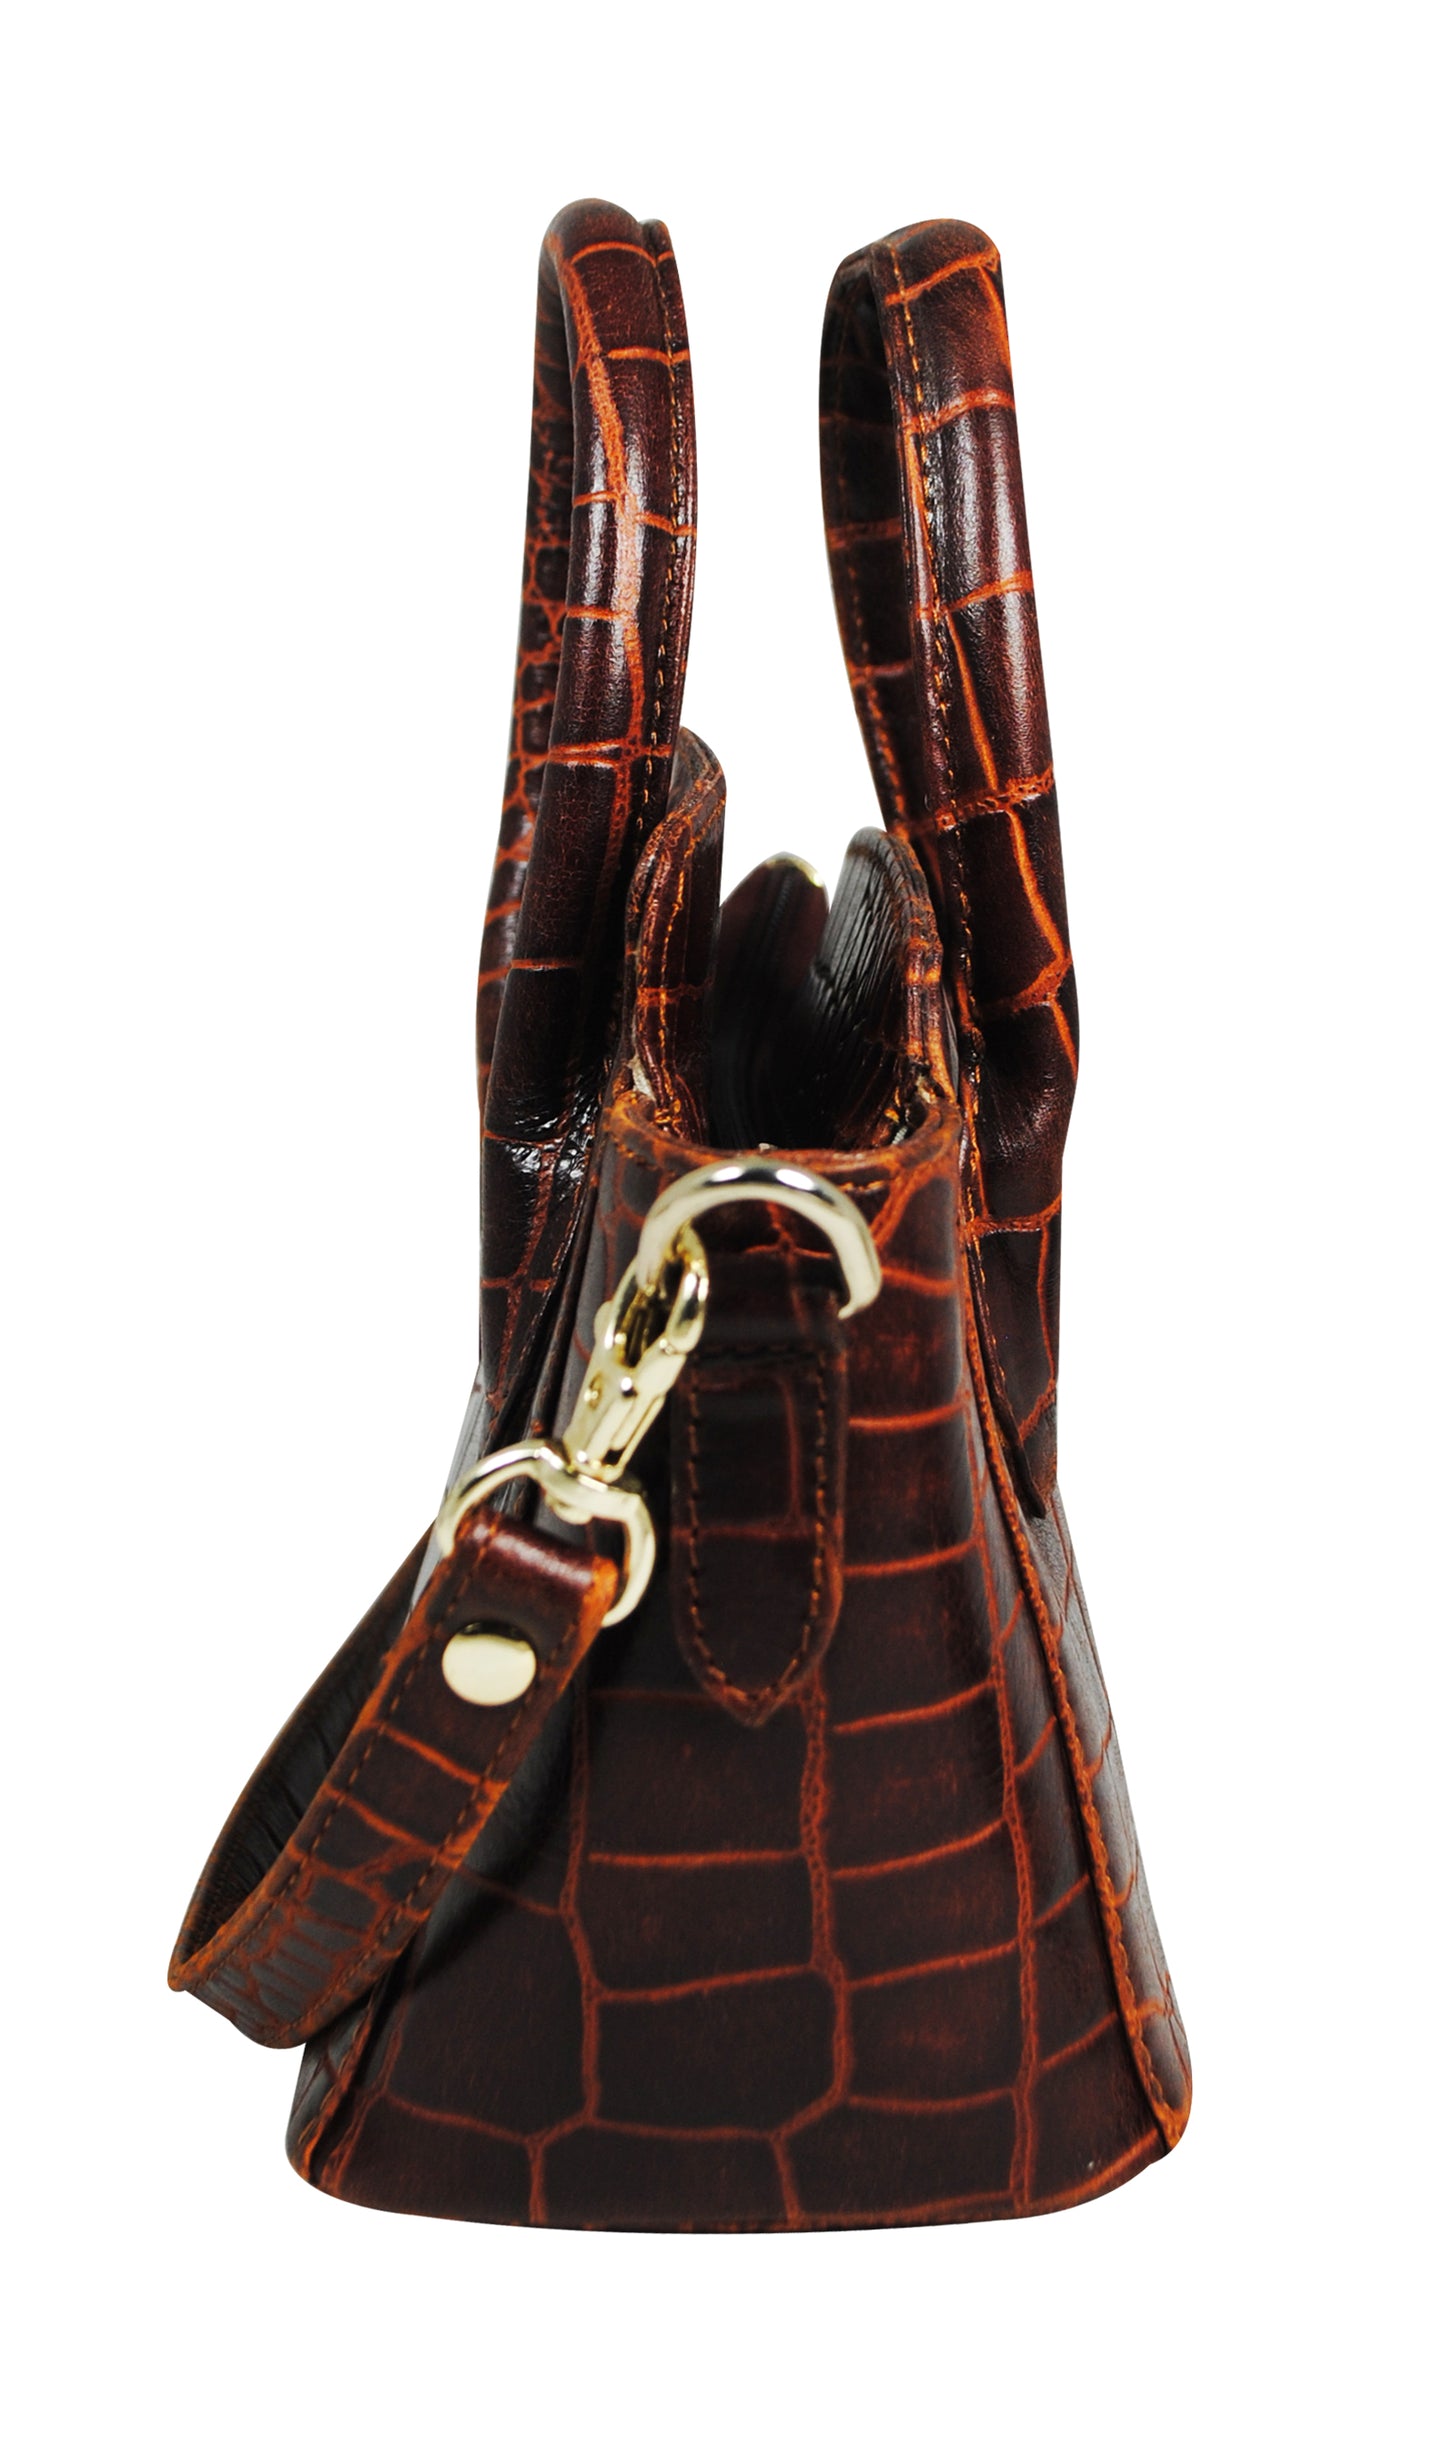 Calfnero Women's Genuine Leather Hand Bag (71330-Cognac)